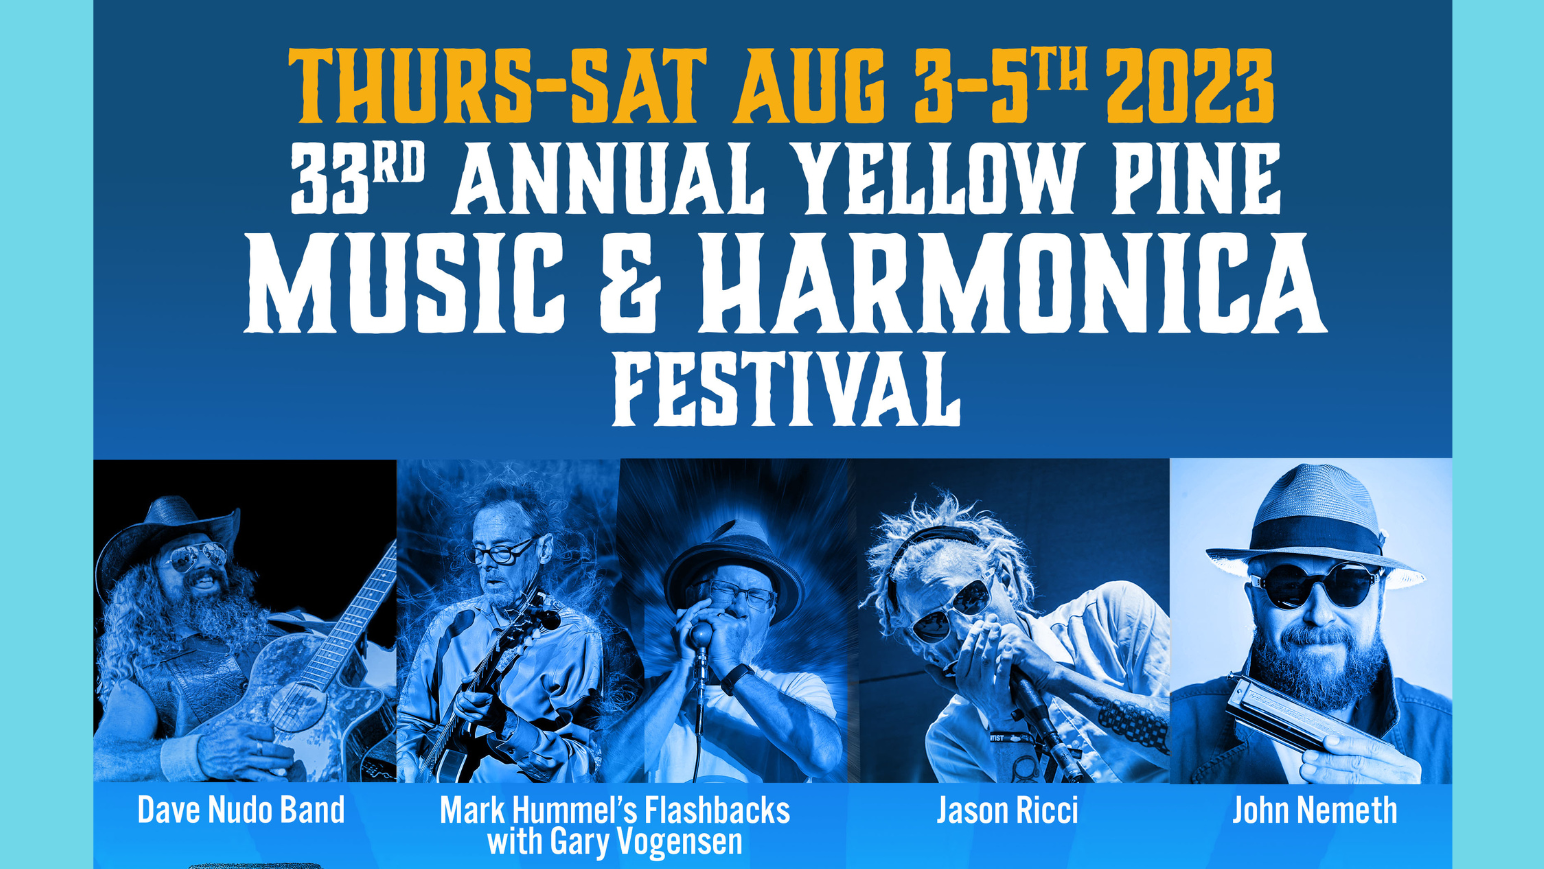 Yellow Pine Music & Harmonica Festival SponsorMyEvent